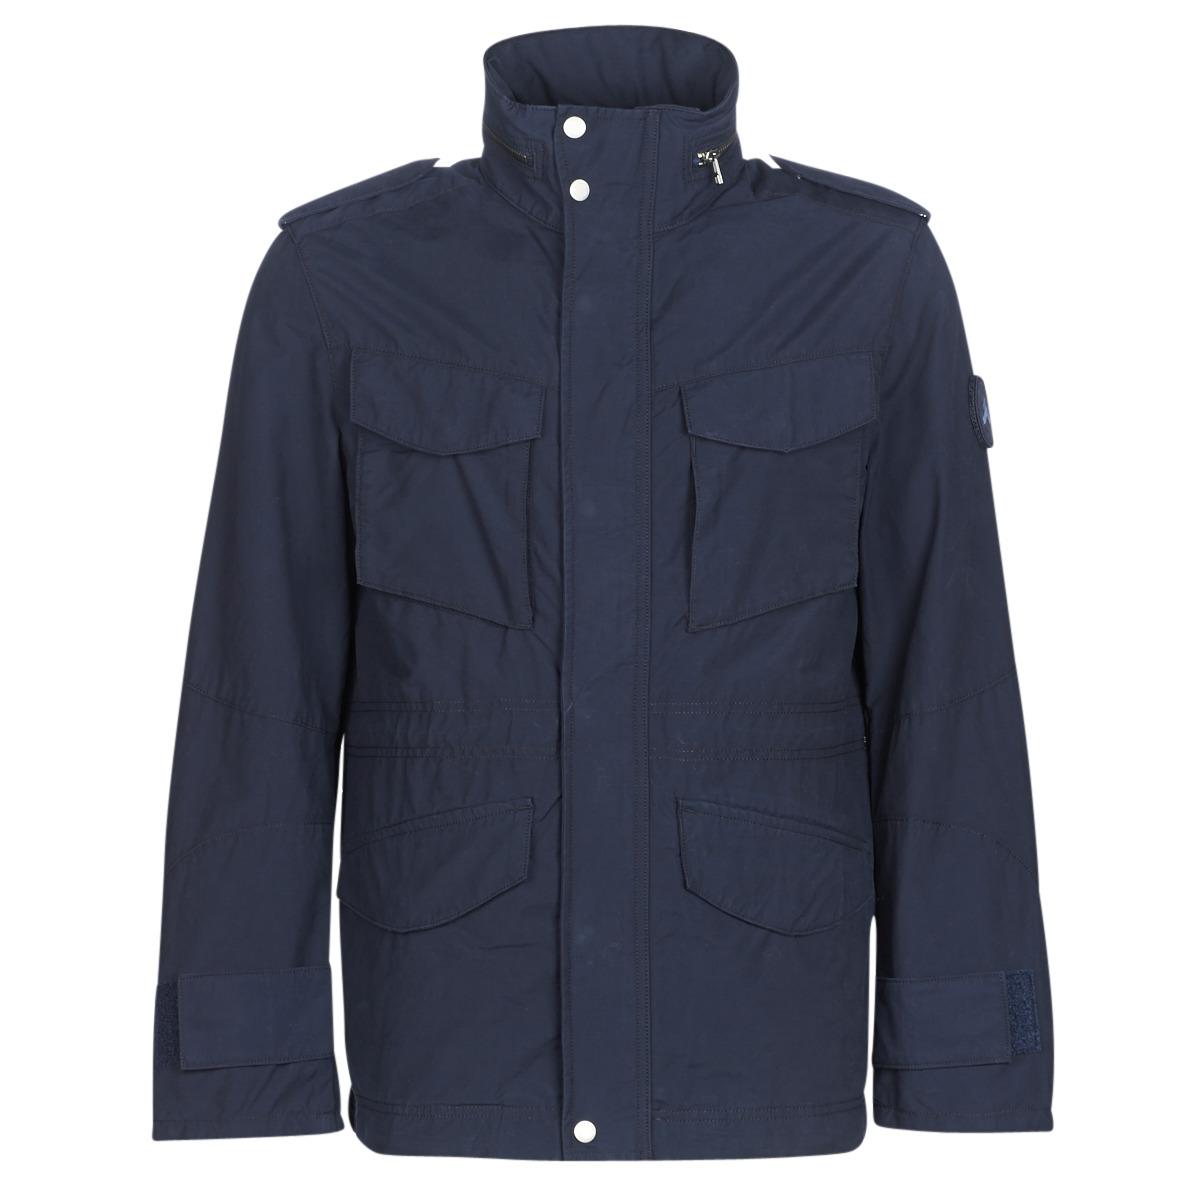 Timberland Vntg M65 Jacket in Blue for Men - Lyst